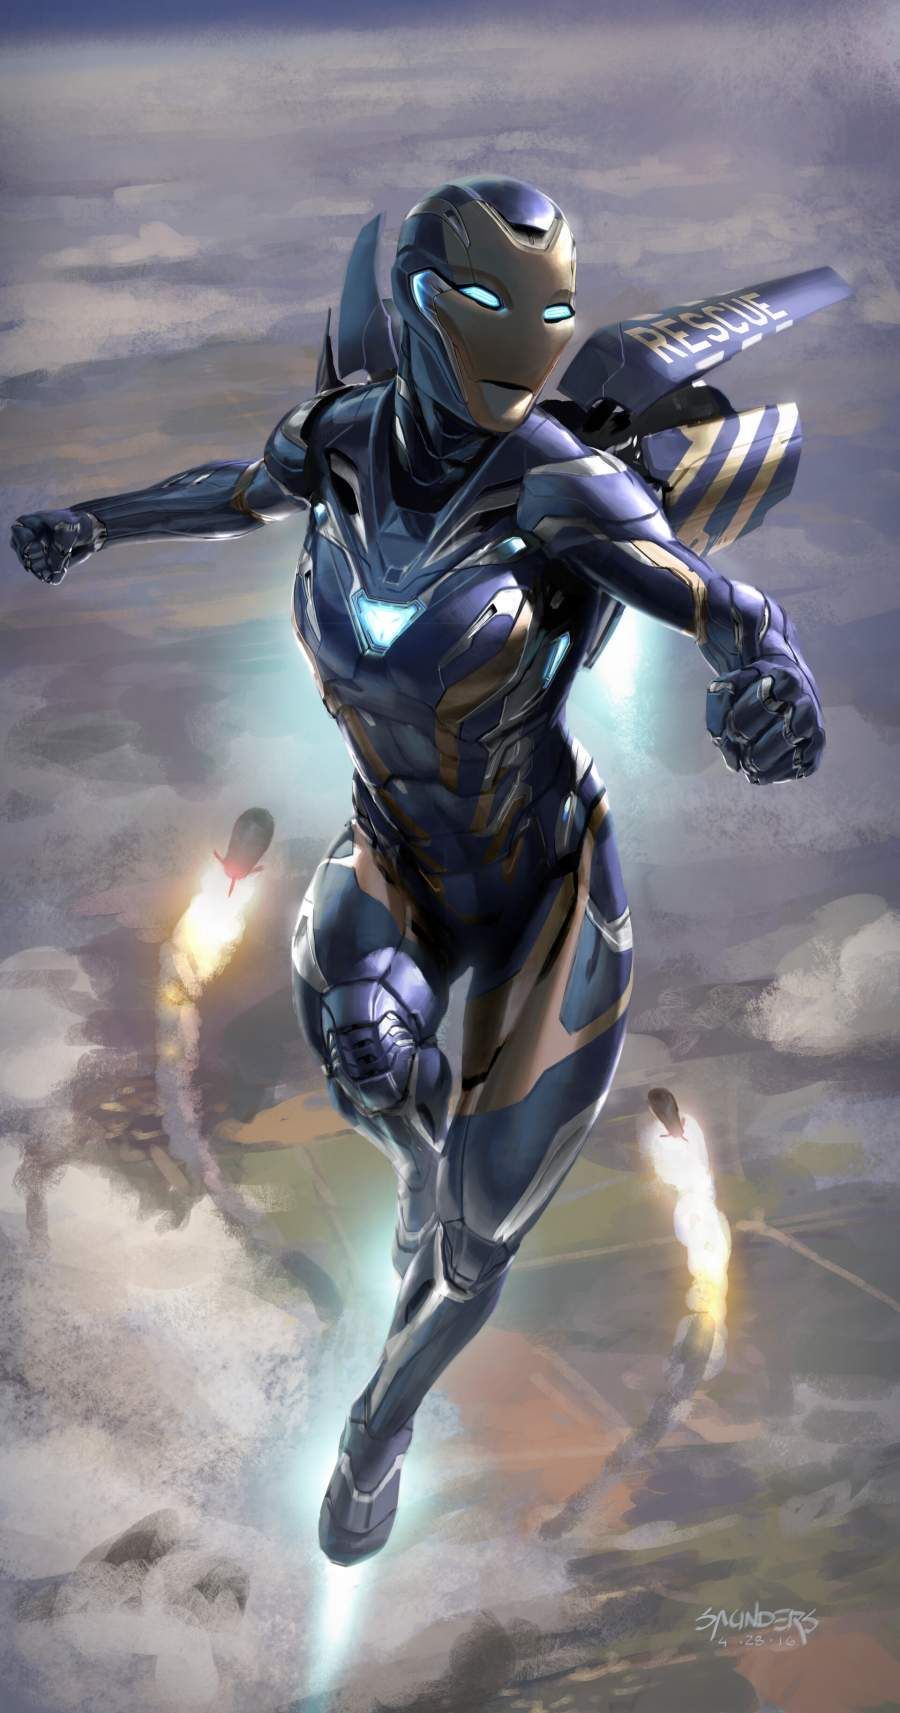 Iron Man Rescue Suit iPhone Wallpaper. Iron man art, Marvel superhero posters, Marvel artwork